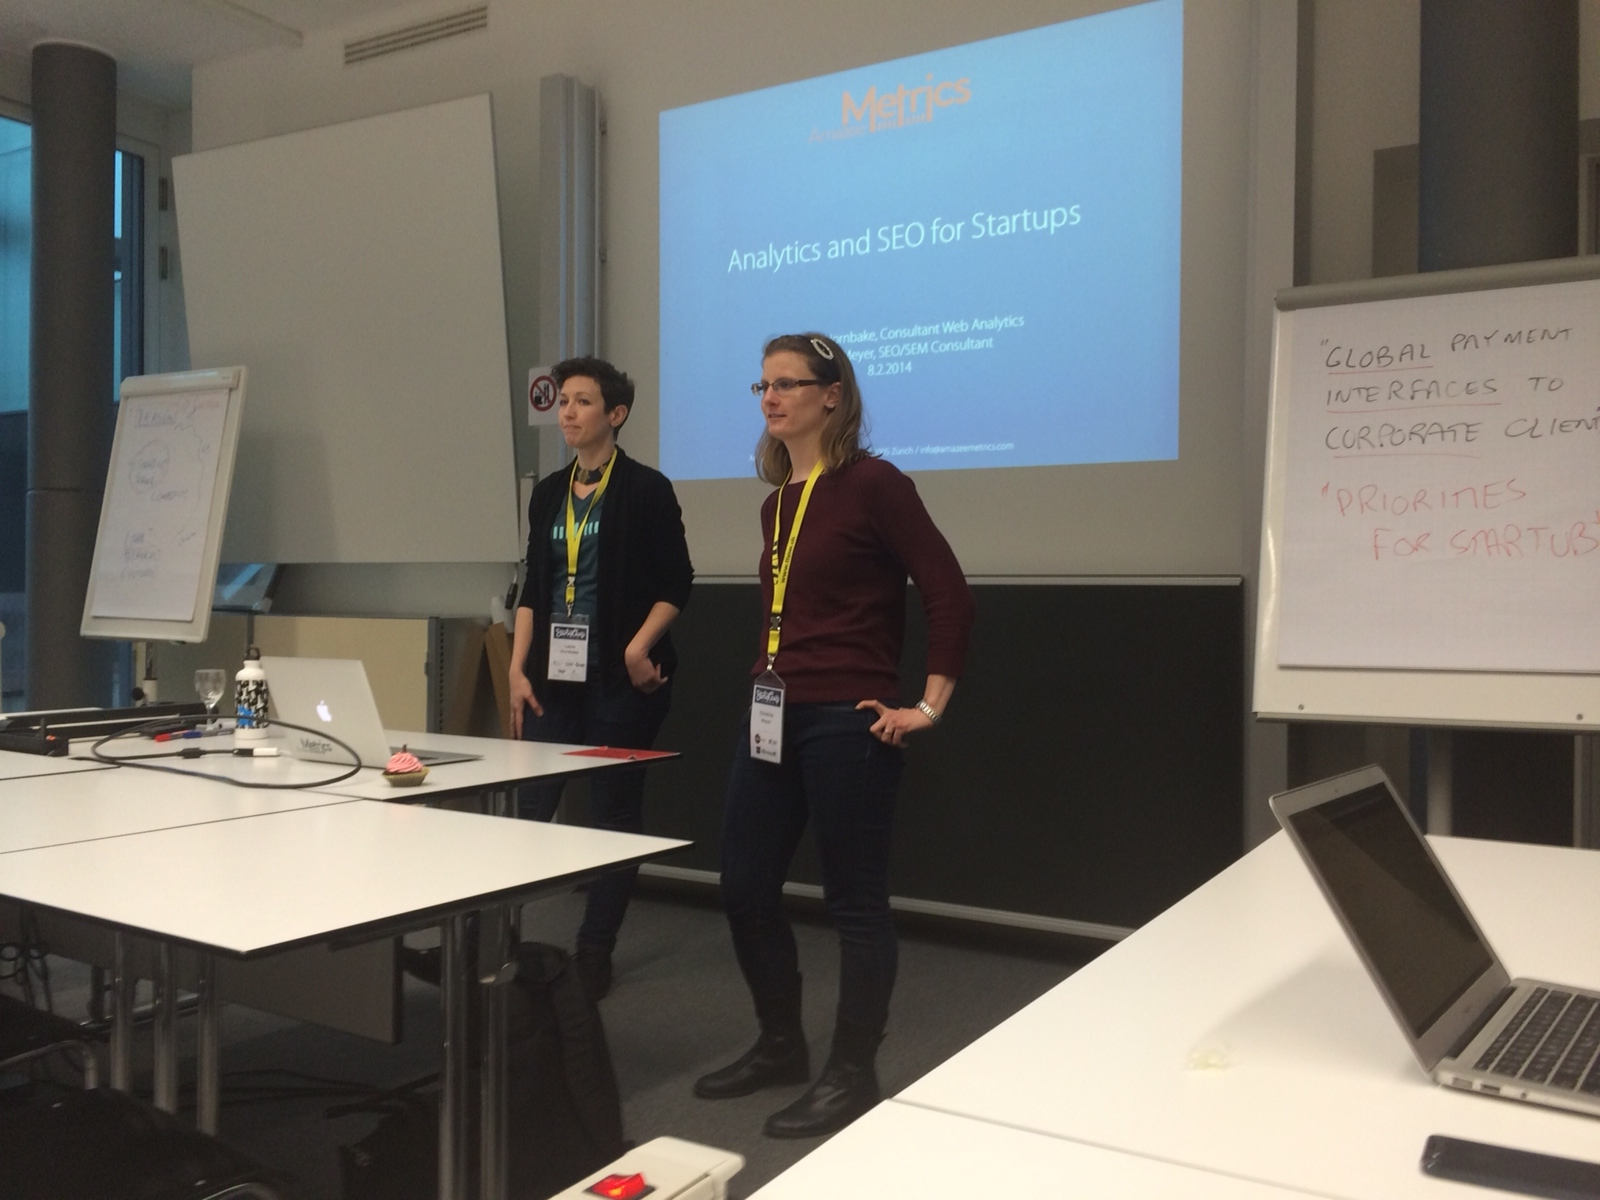 Laura and Christina present Web Analytics and SEO for Startups